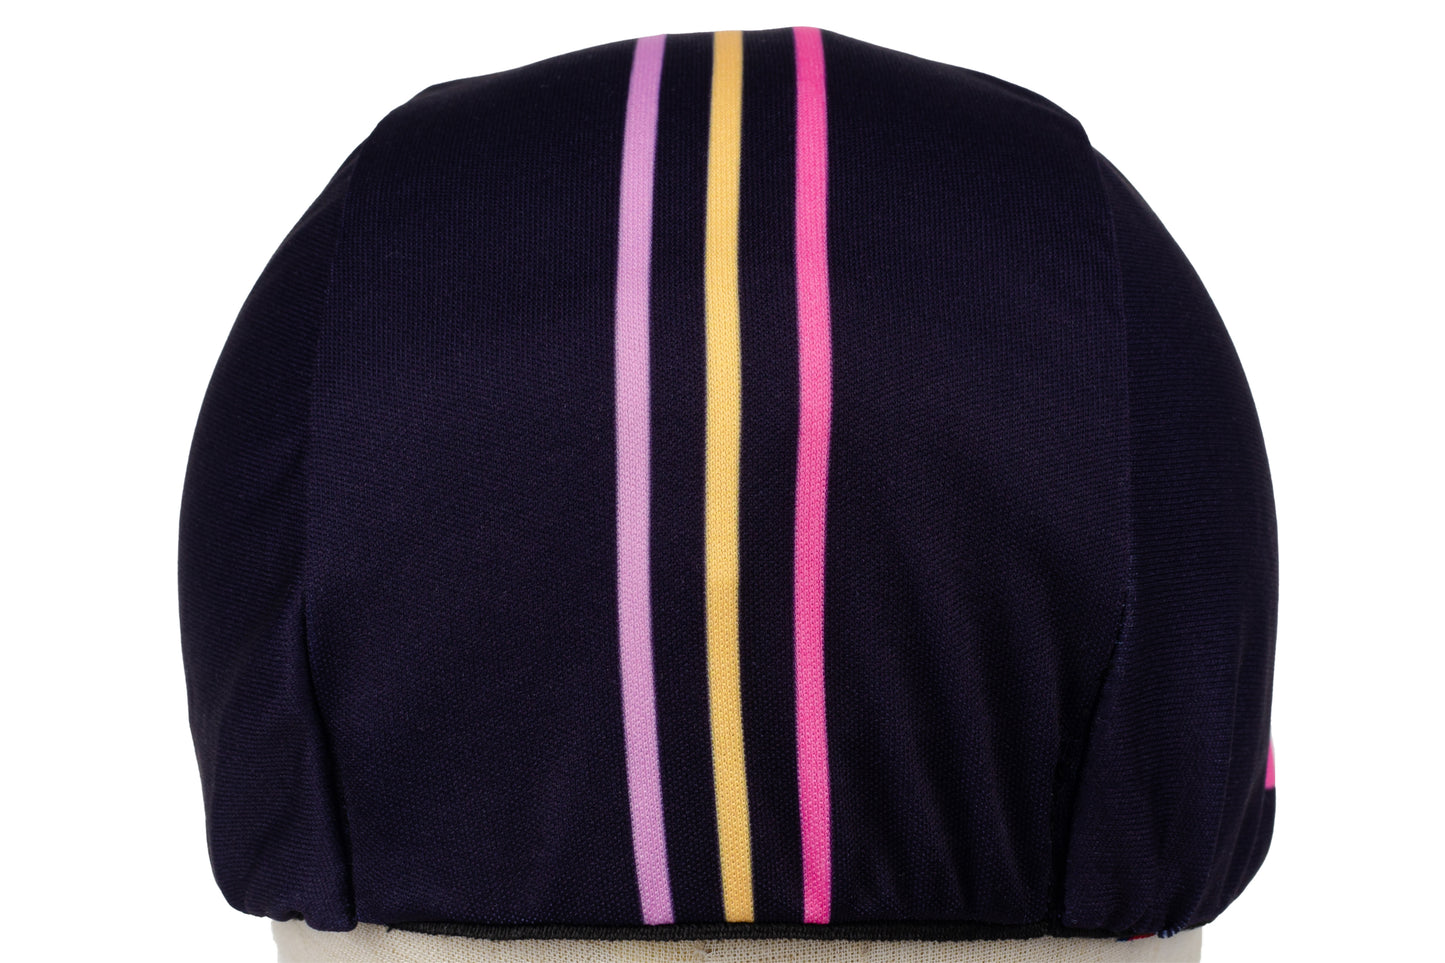 GW 1980 Stripes Cycling cap (Rachel)